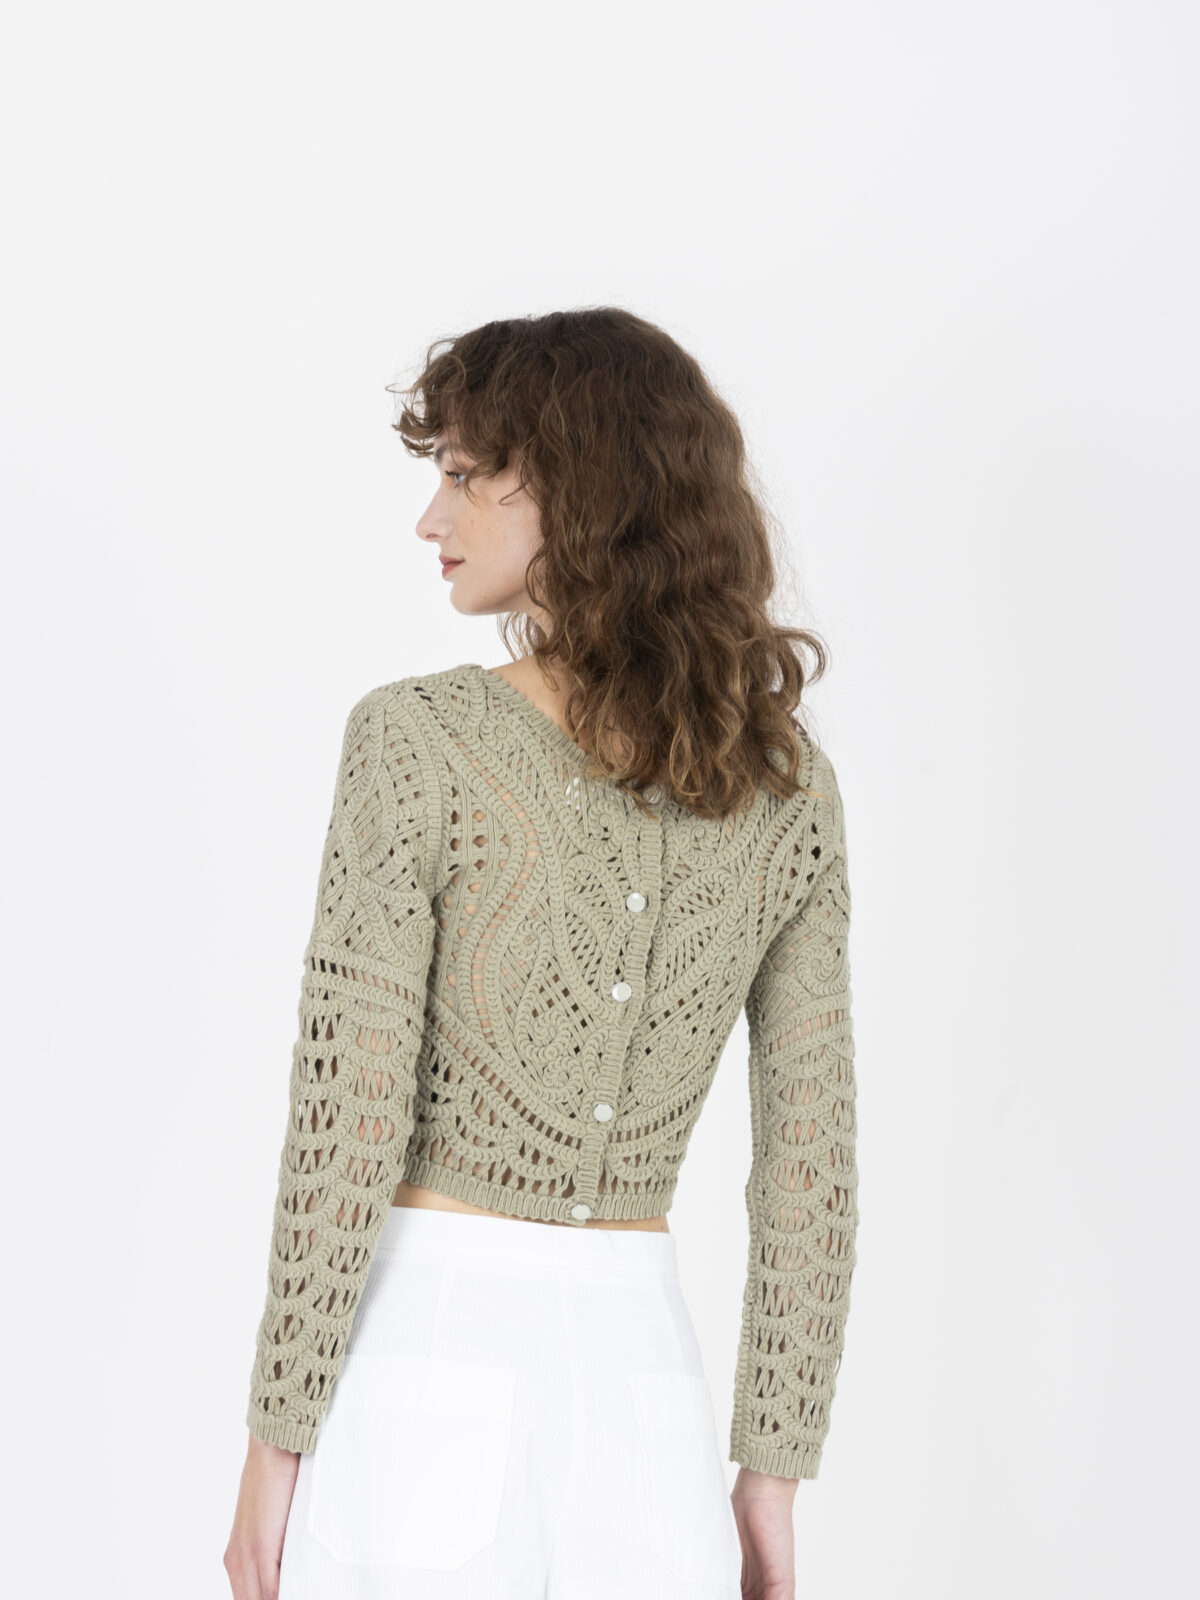 marc-openork-knit-cardigan-cotton-cropped-khaki-buttons-bash-matchboxathens